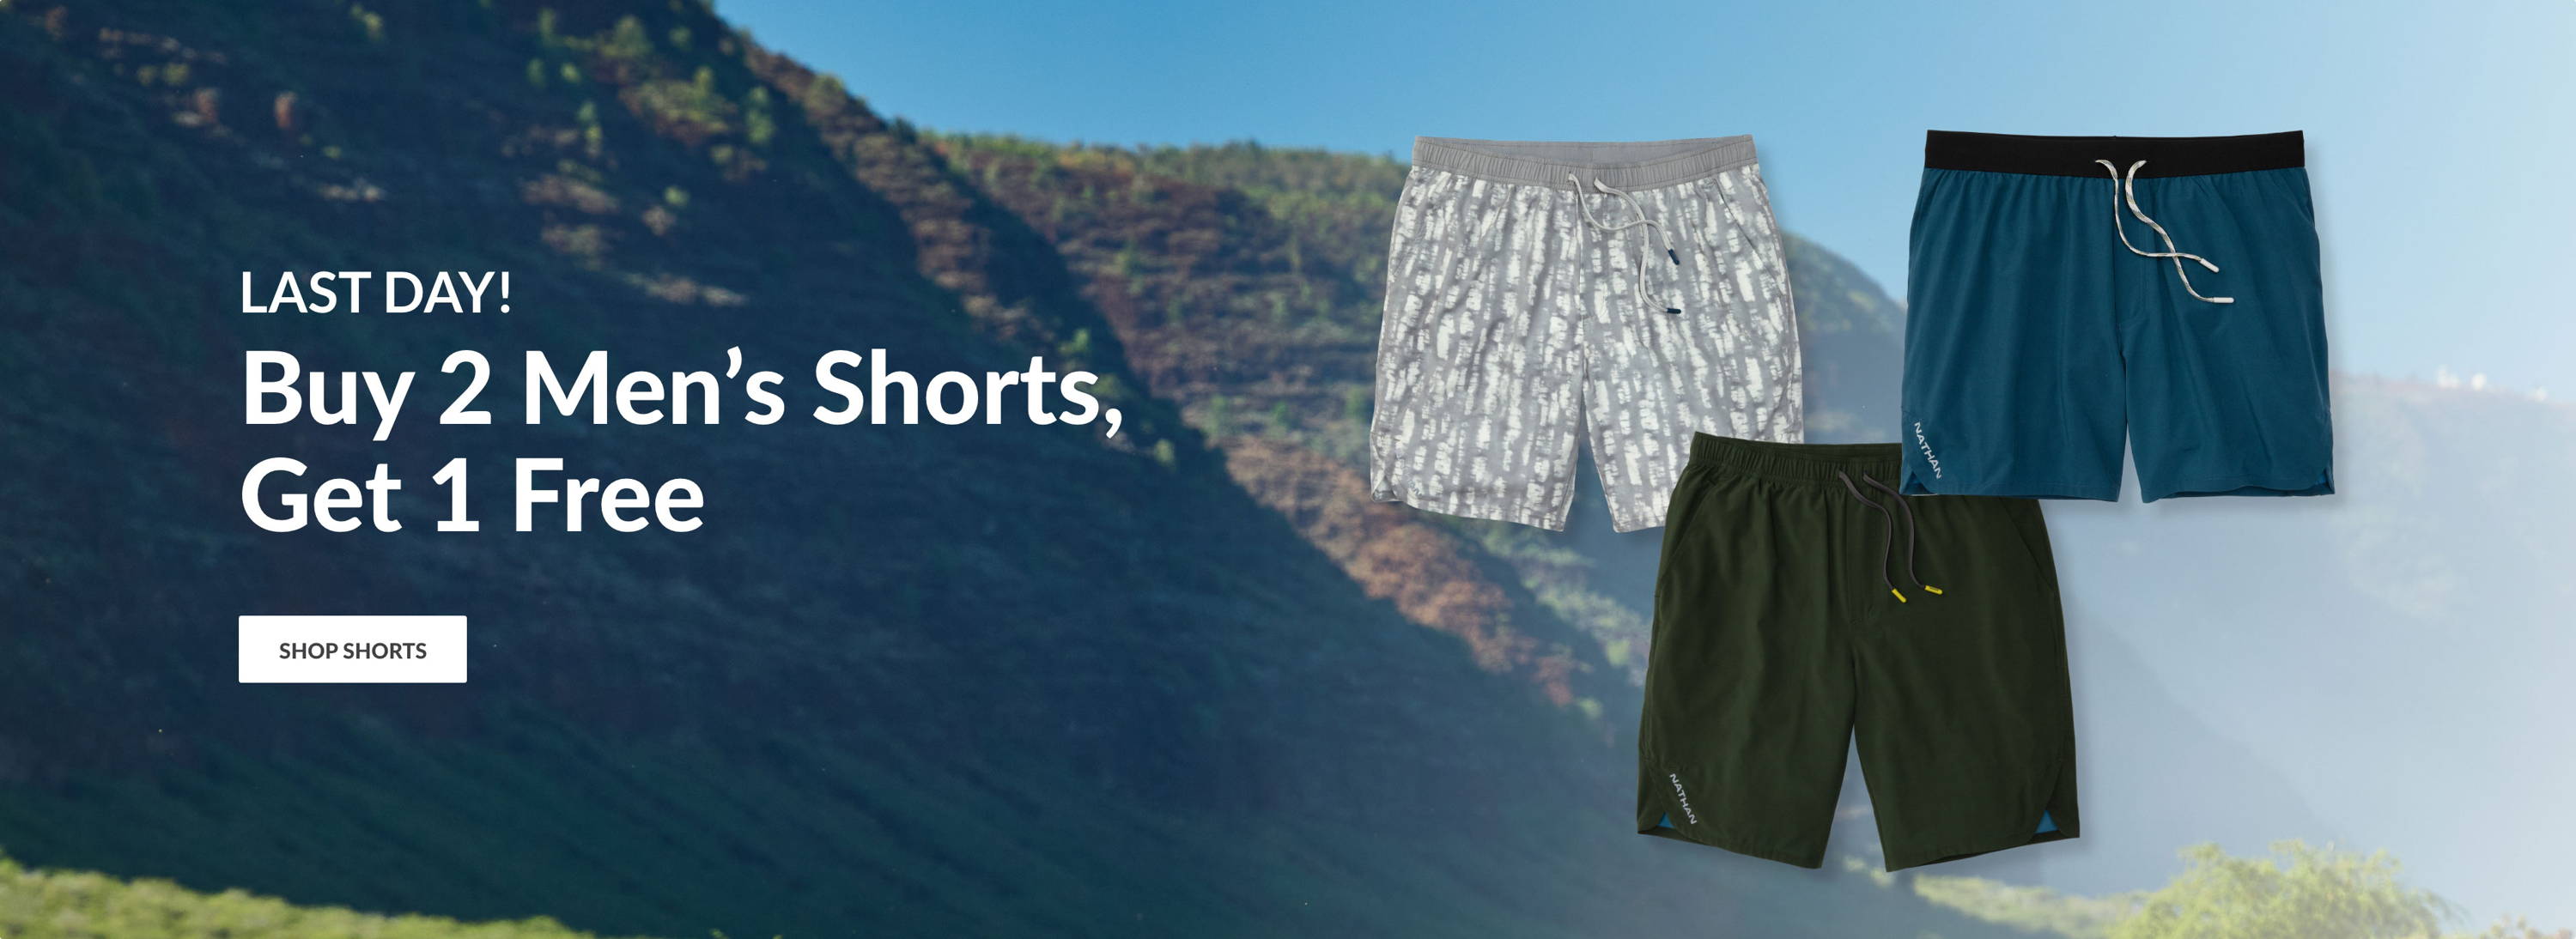 Last Day! Buy 2 Men's Shorts, Get 1 Free - Shop Shorts